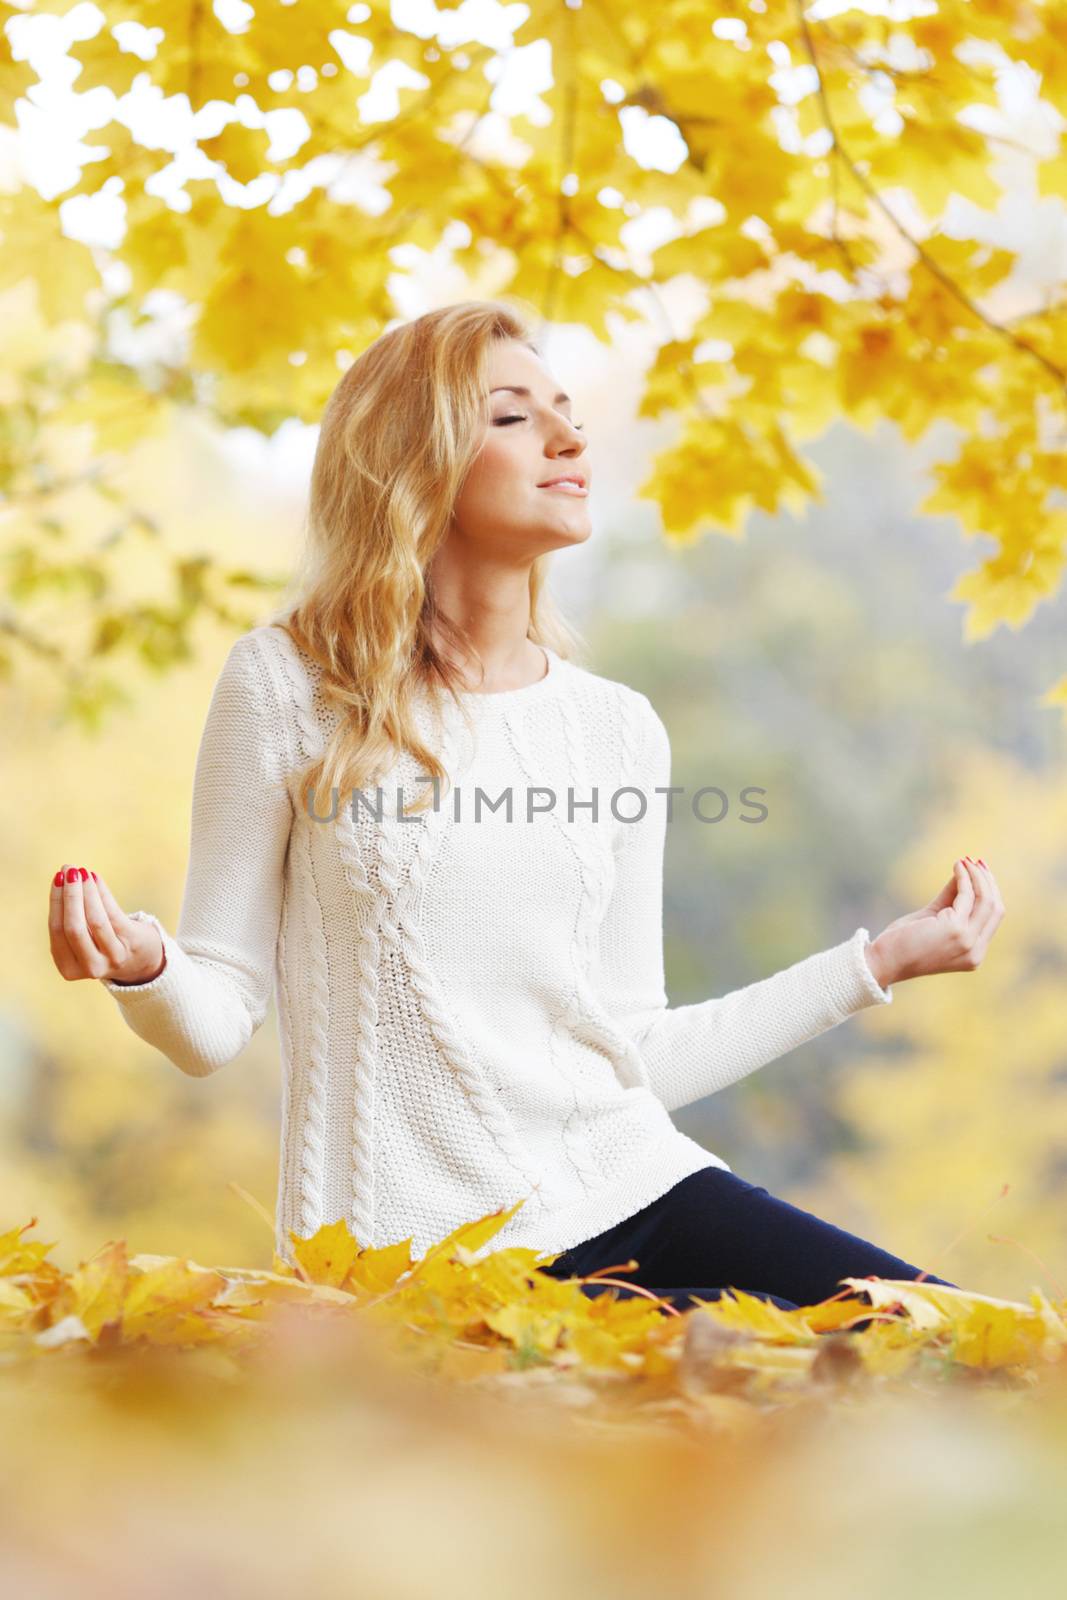 Pretty woman doing yoga exercises in autumn park